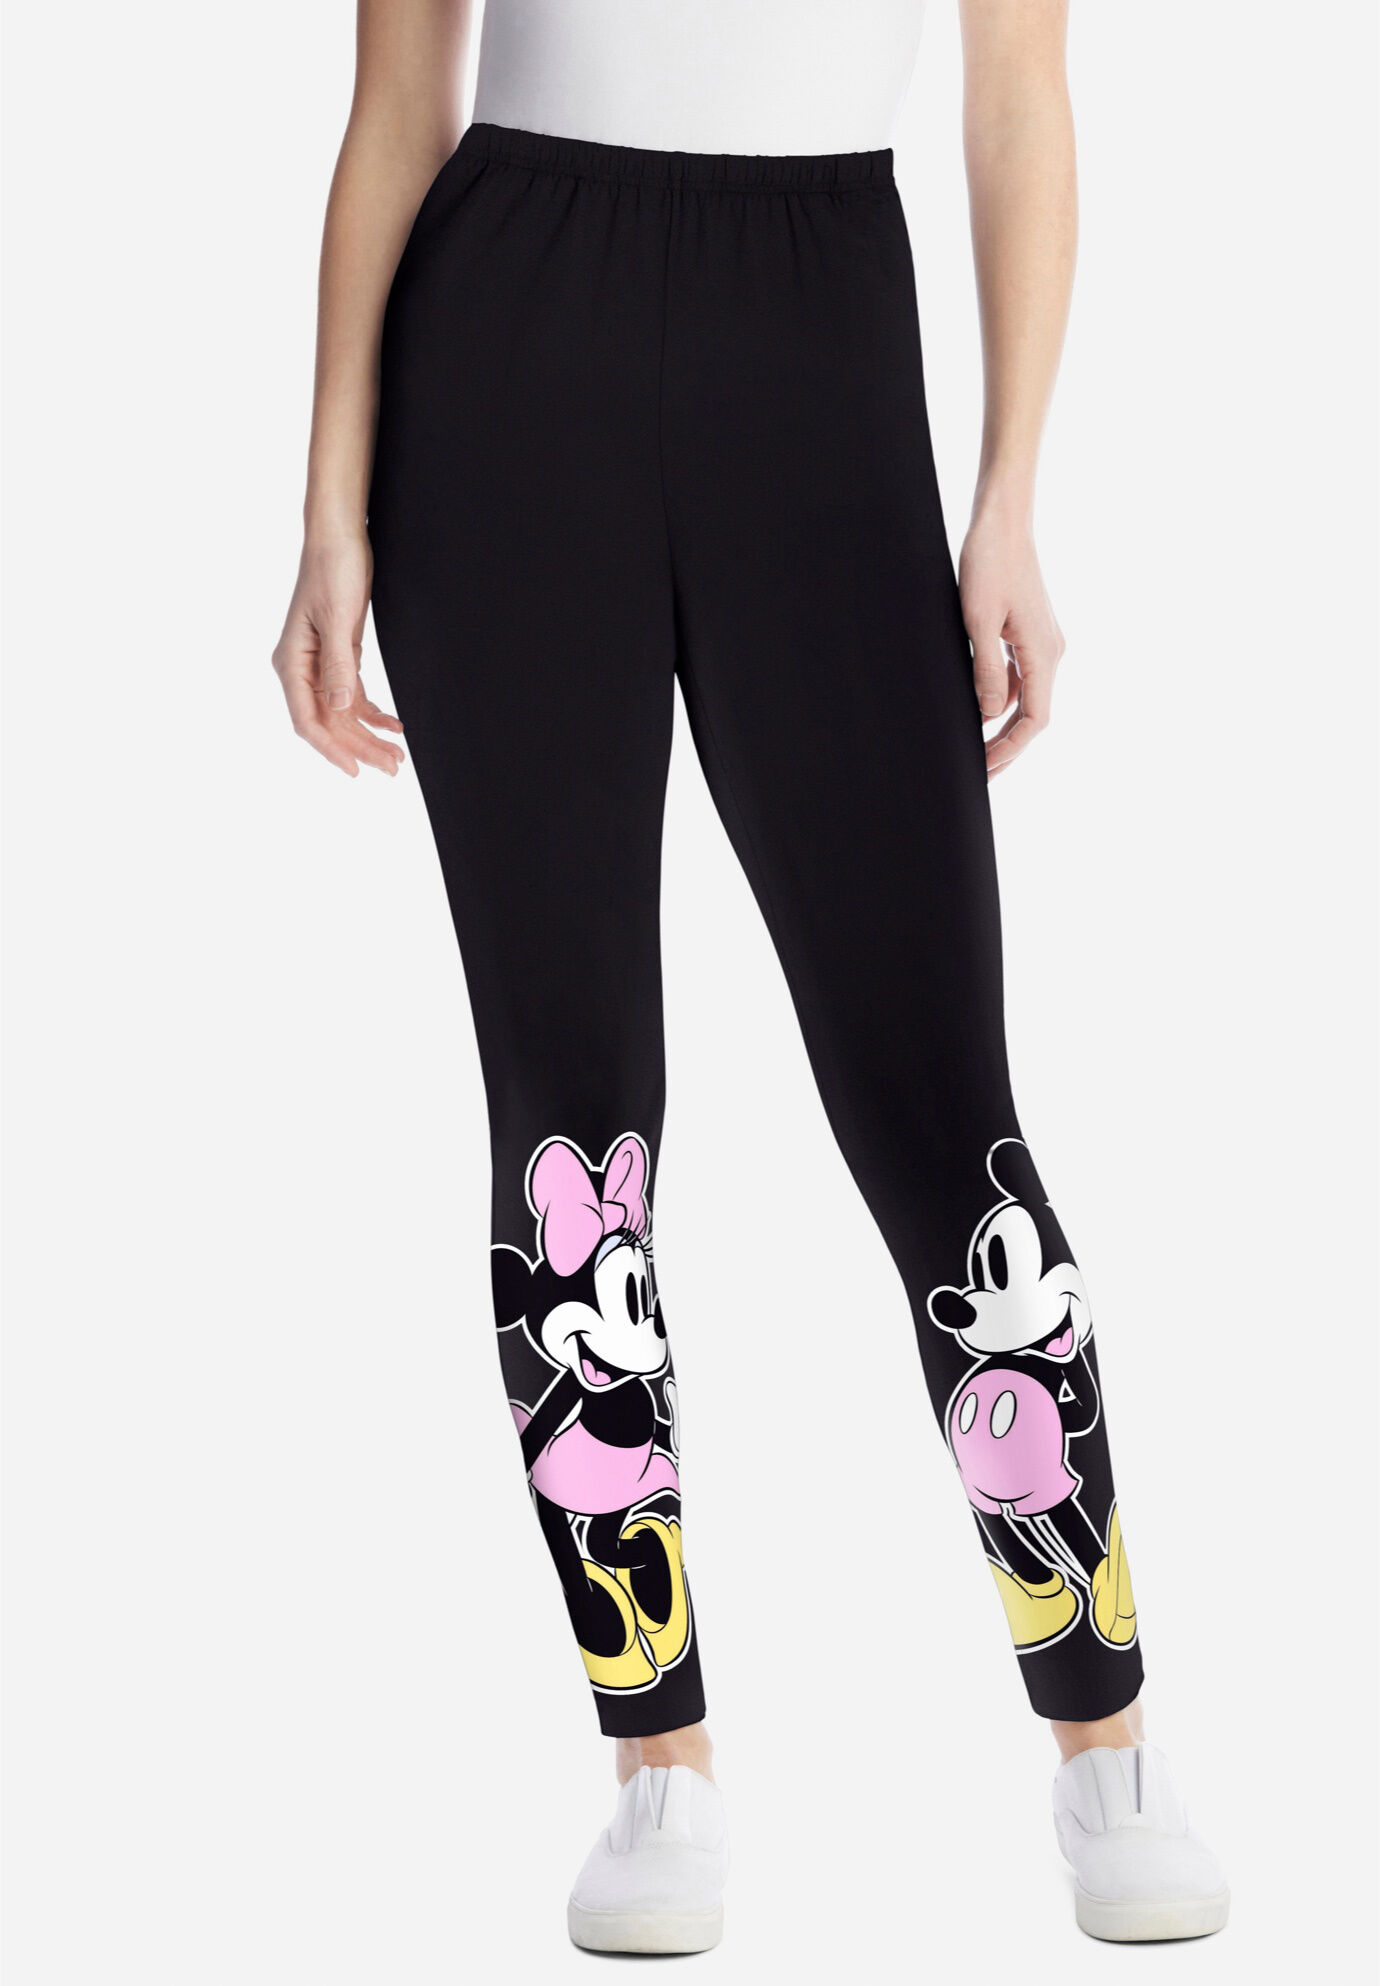 Mickey Minnie Mouse Christmas Magic Holiday Women's Leggings TC Plus Size  12-20 | eBay